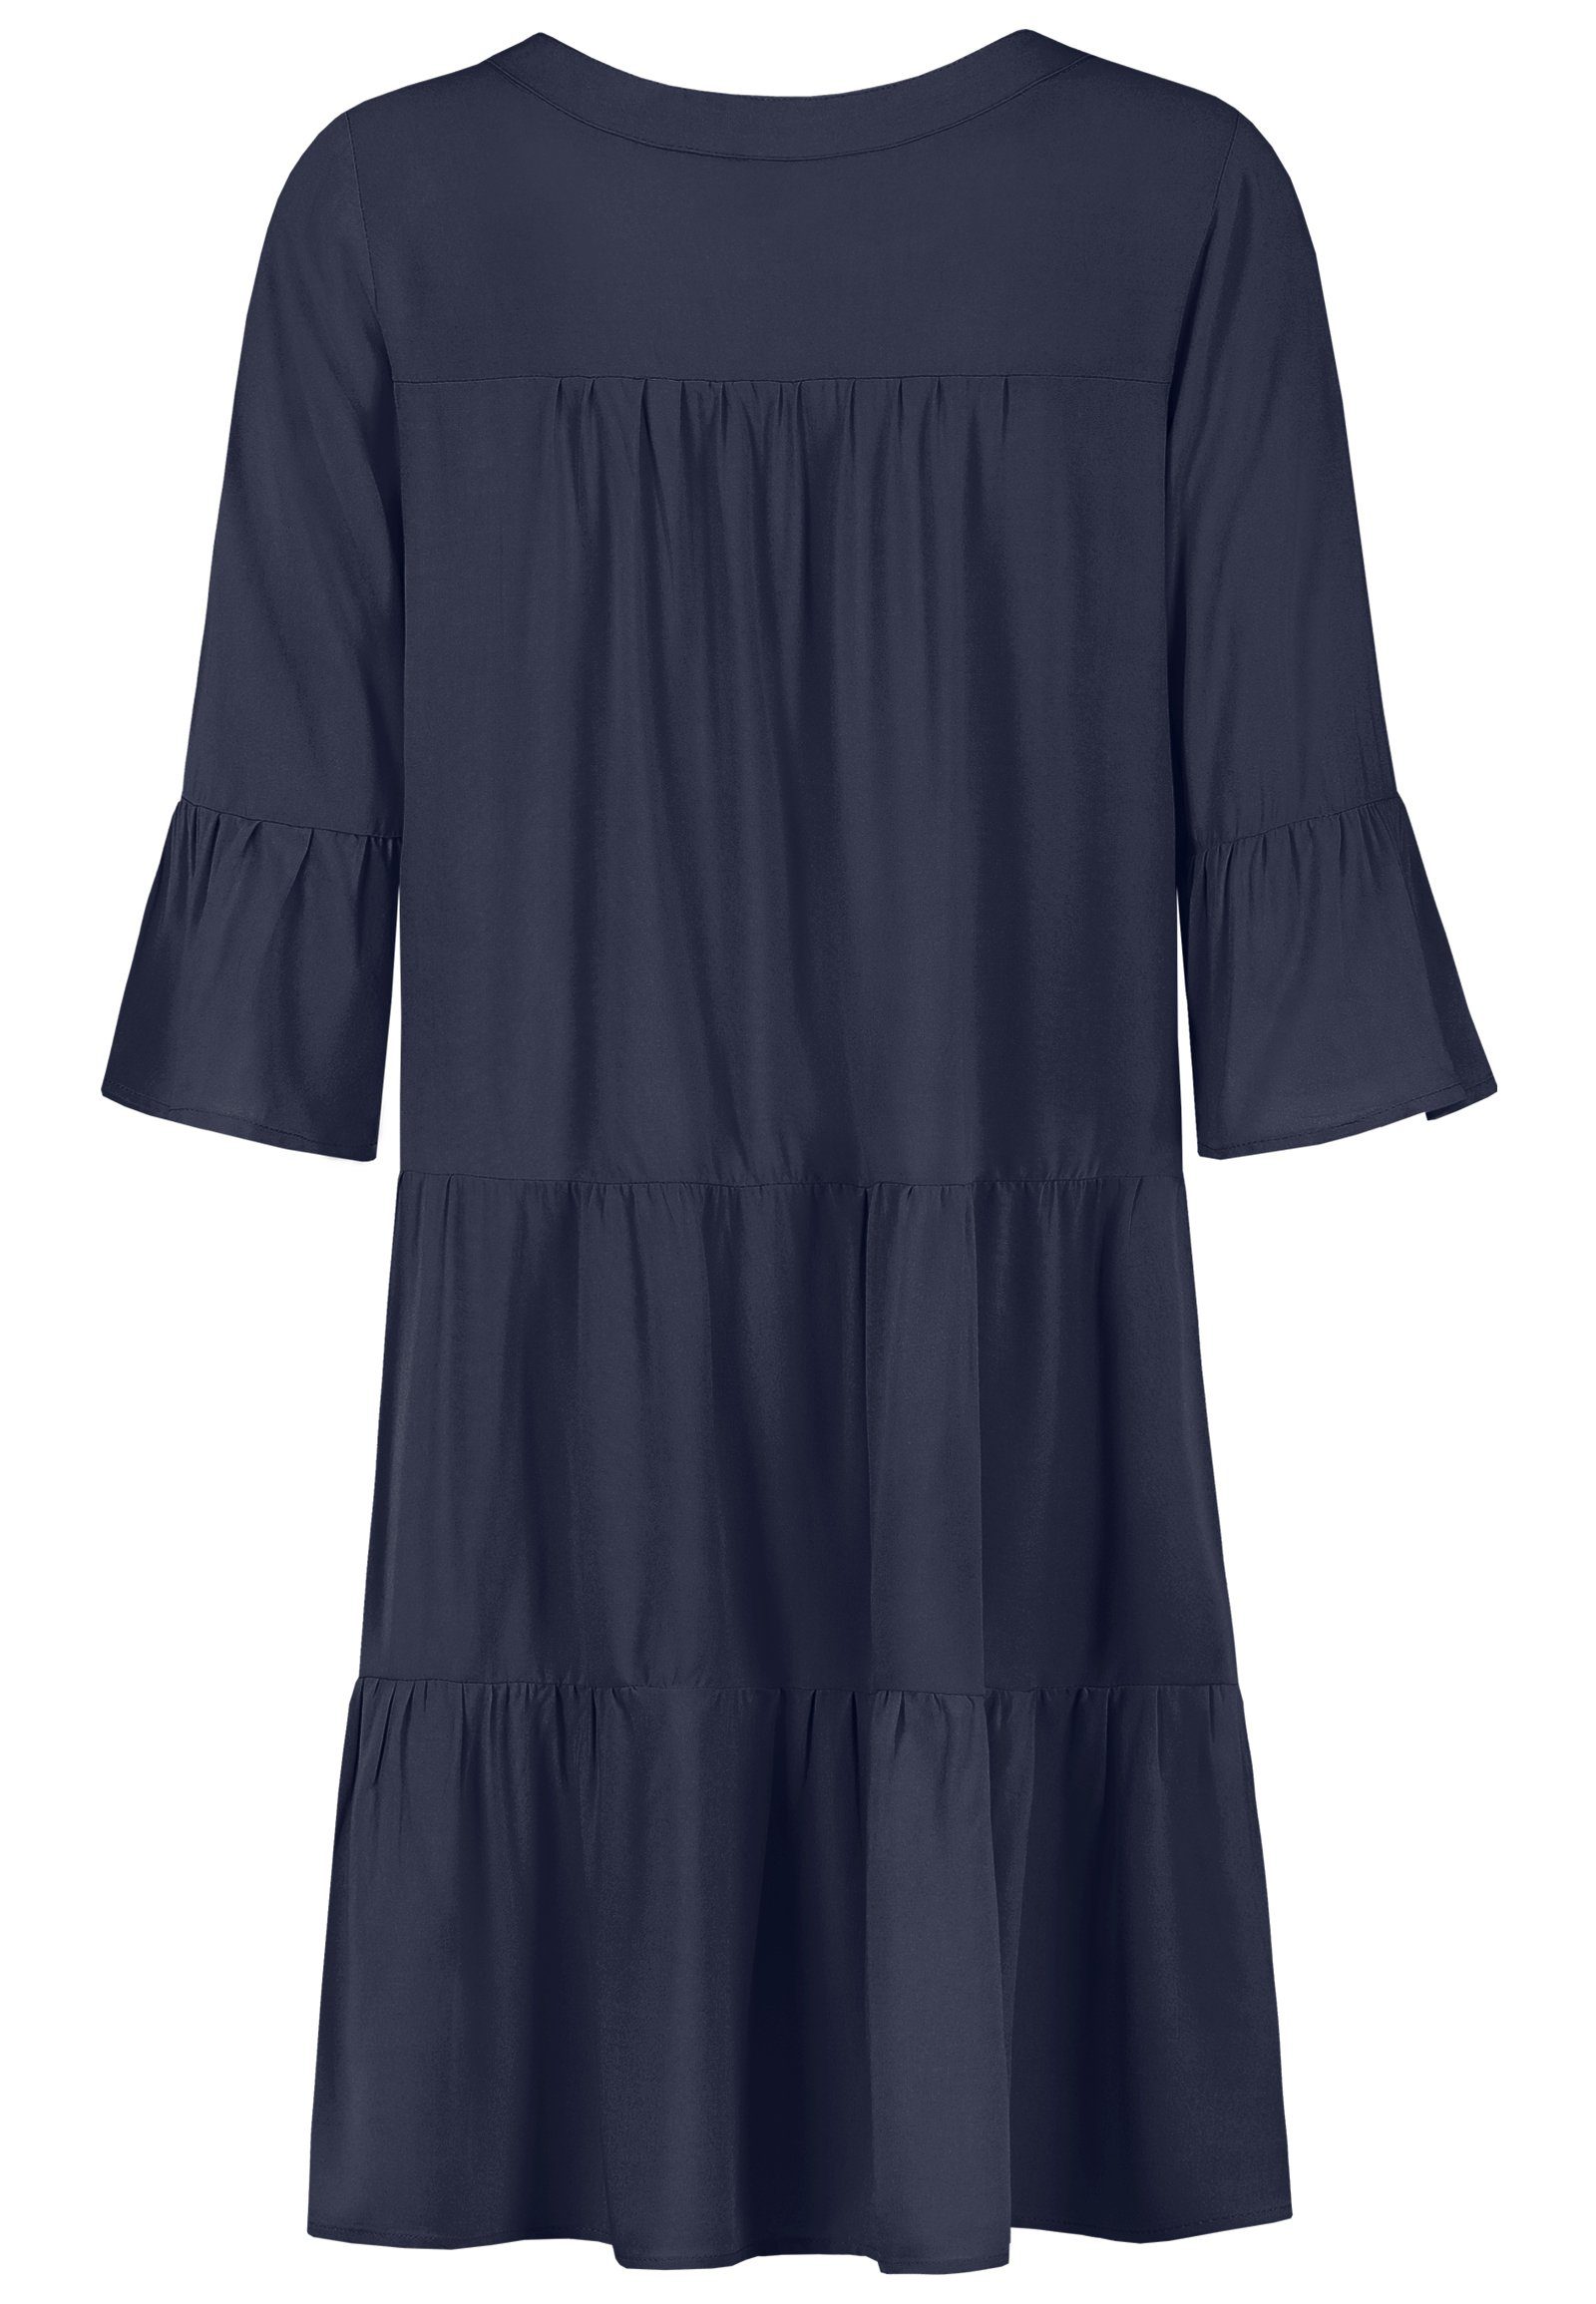 SUBLEVEL Strandkleid Sublevel Damen Kleid MIT Sommerkleid VOLANTS Strandkleid Navy Viskose 100